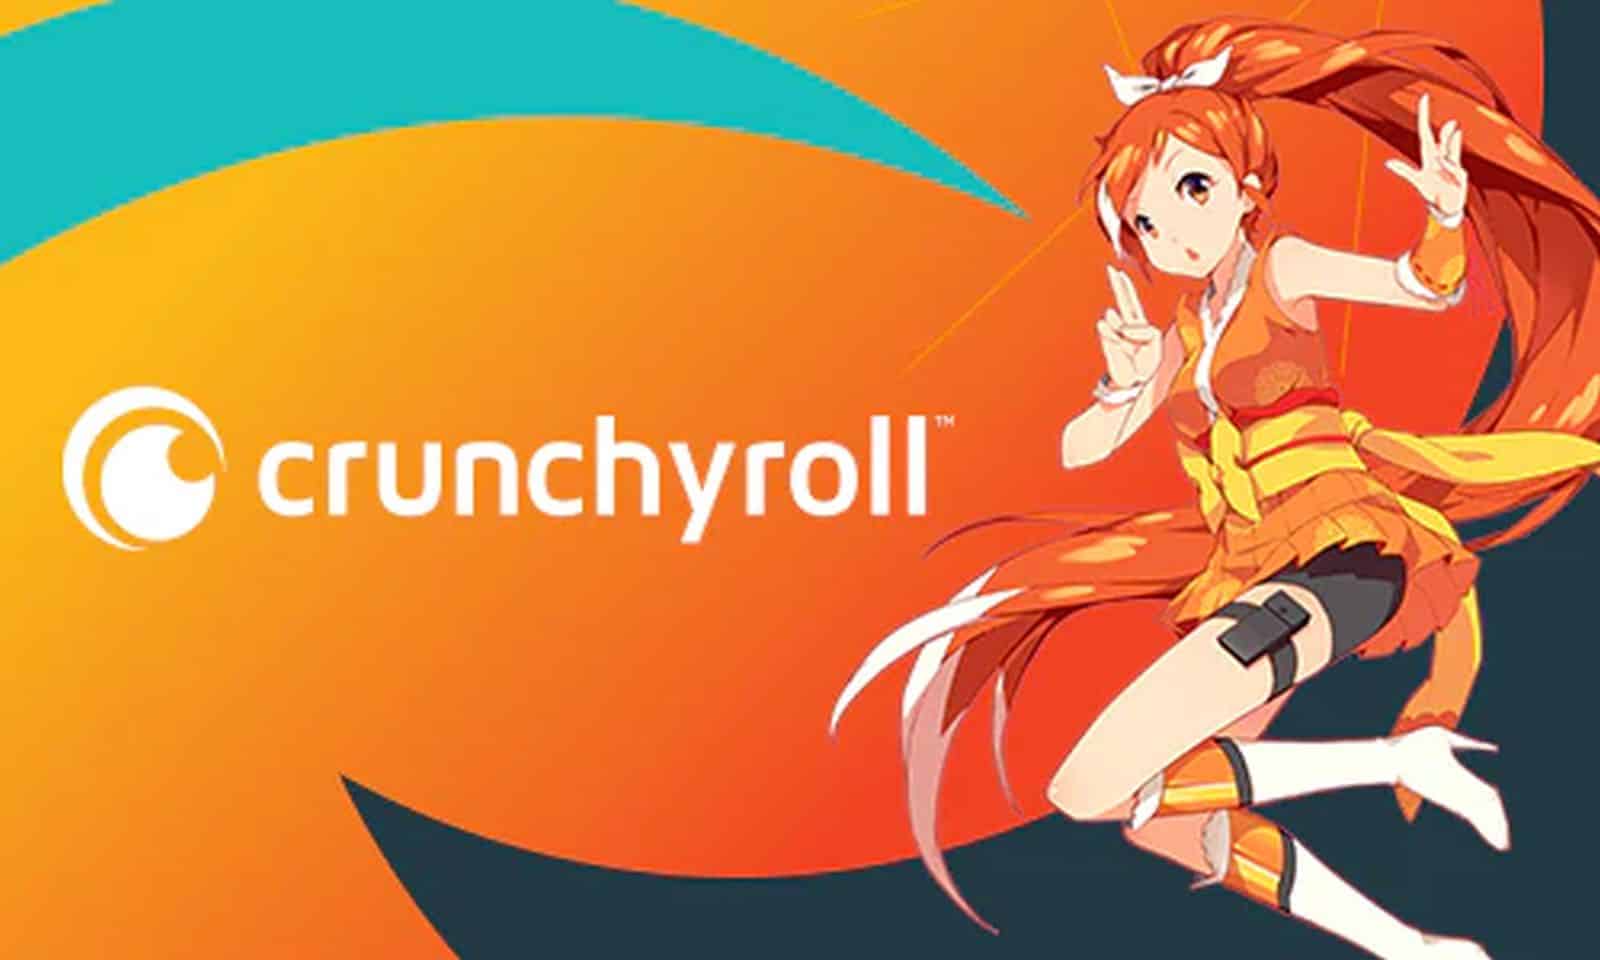 Crunchyroll games